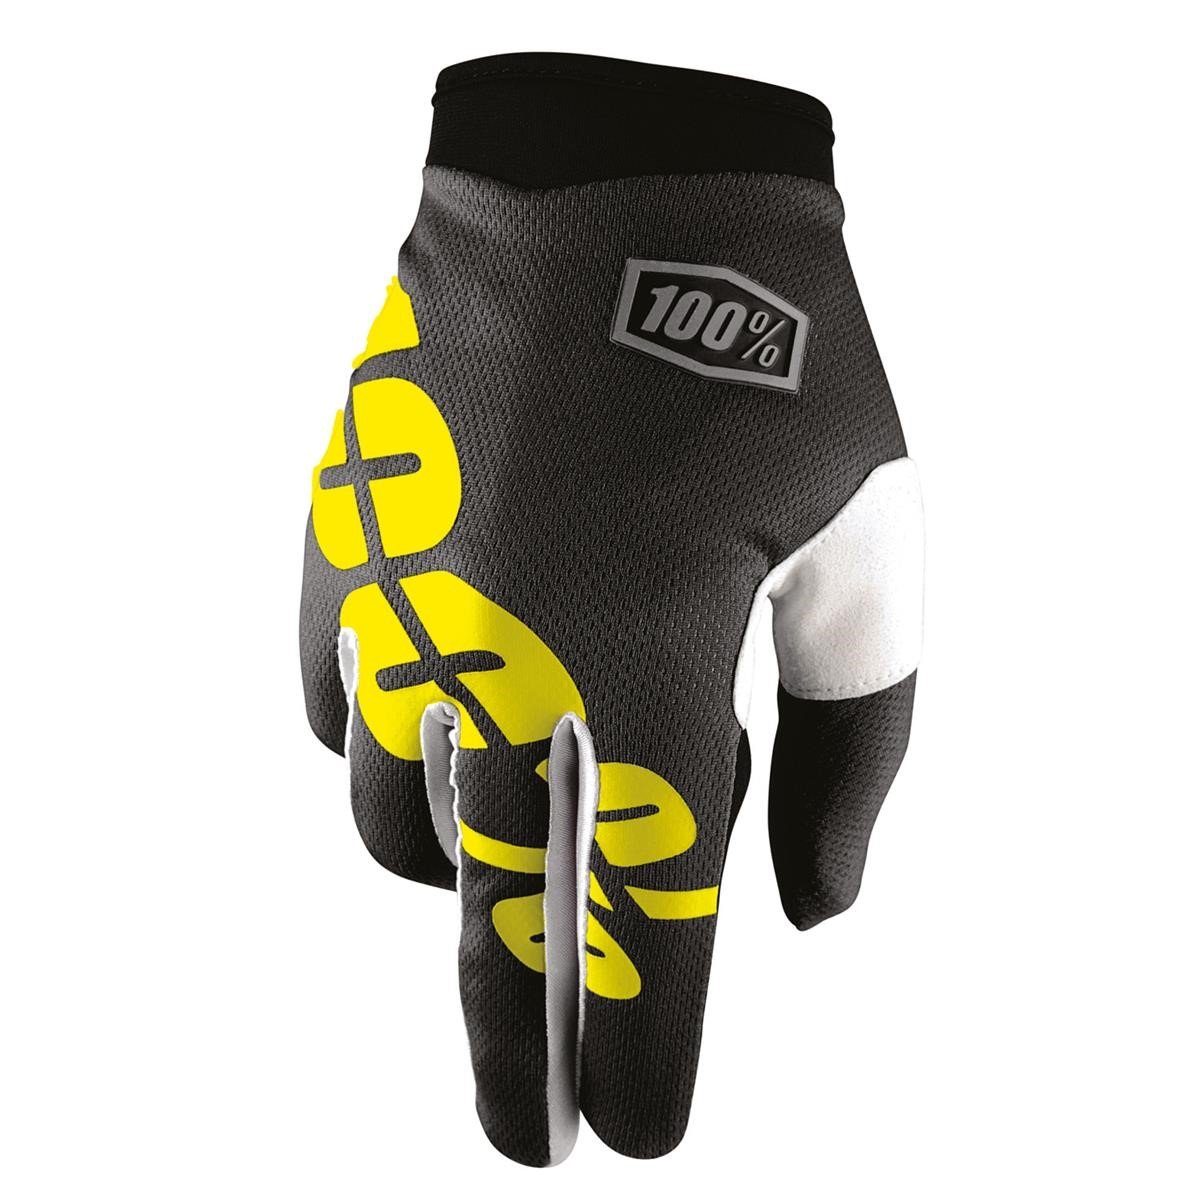 100% Handschuhe iTrack Schwarz/Gelb